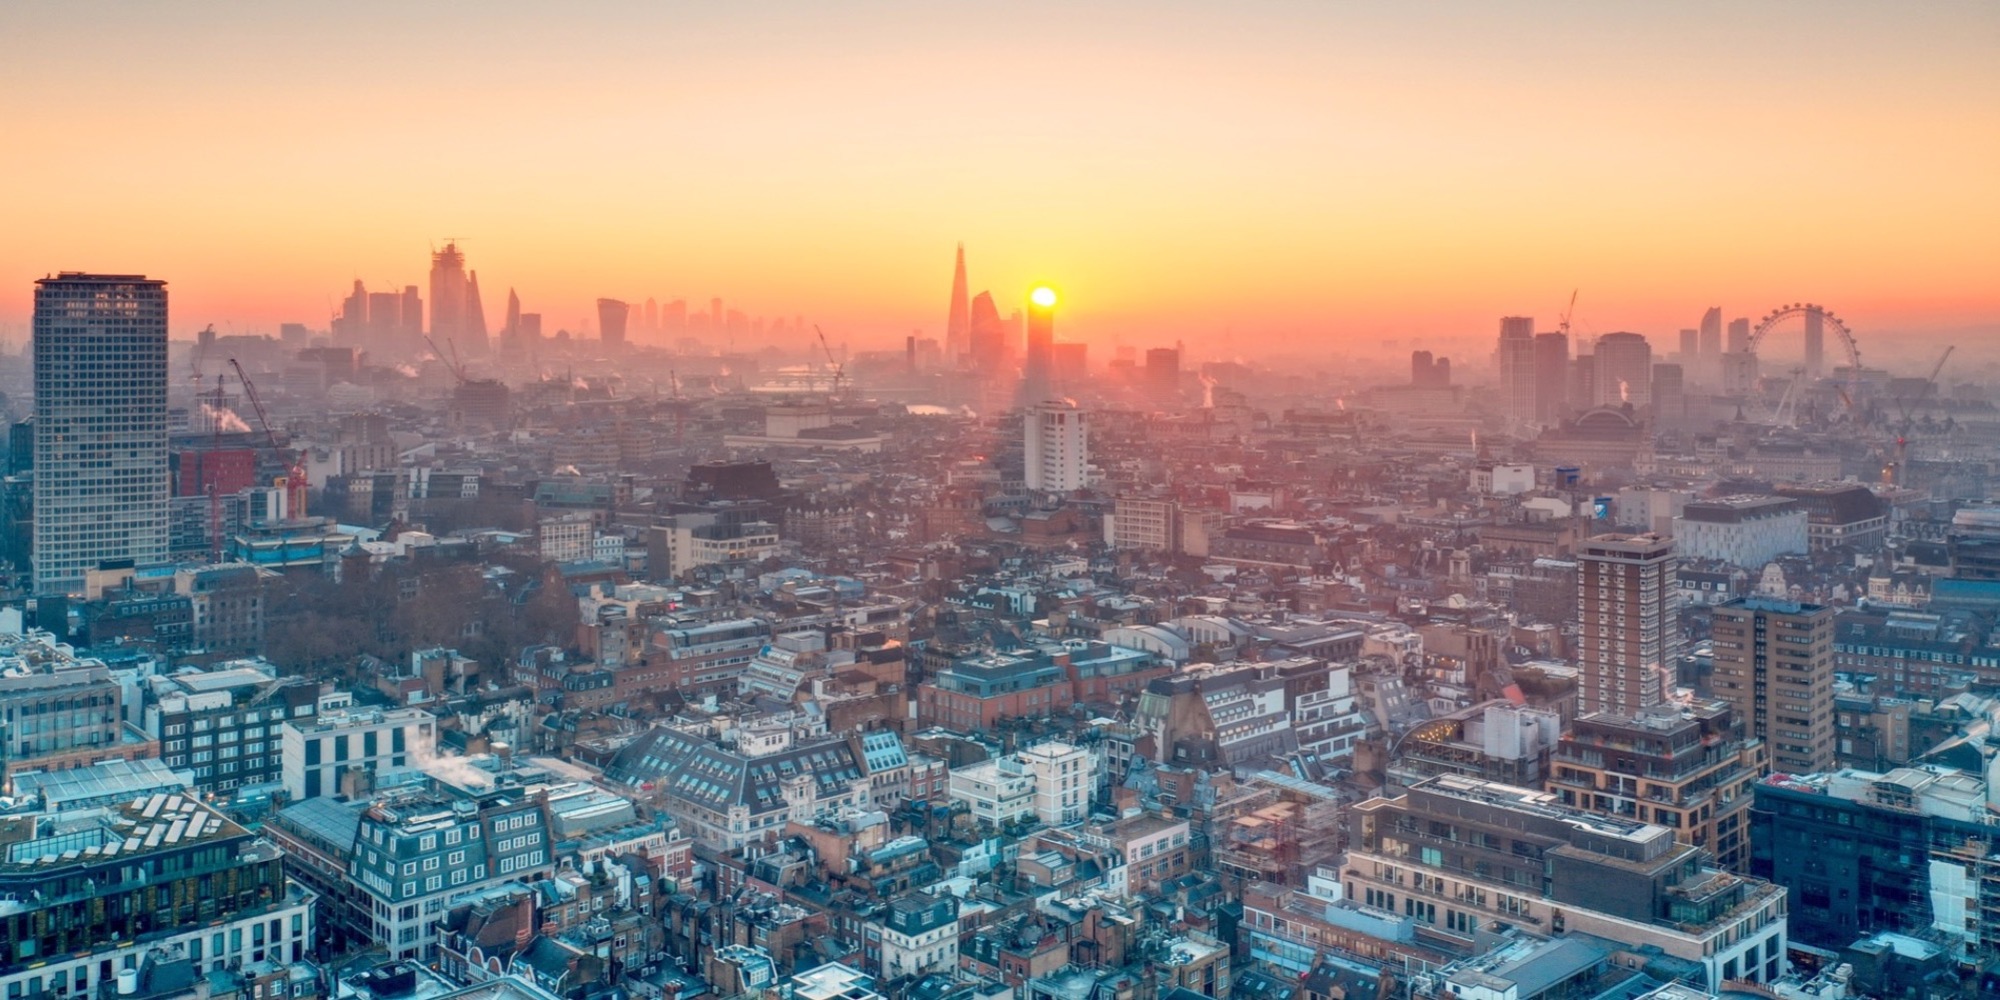 Image of the London Skyline